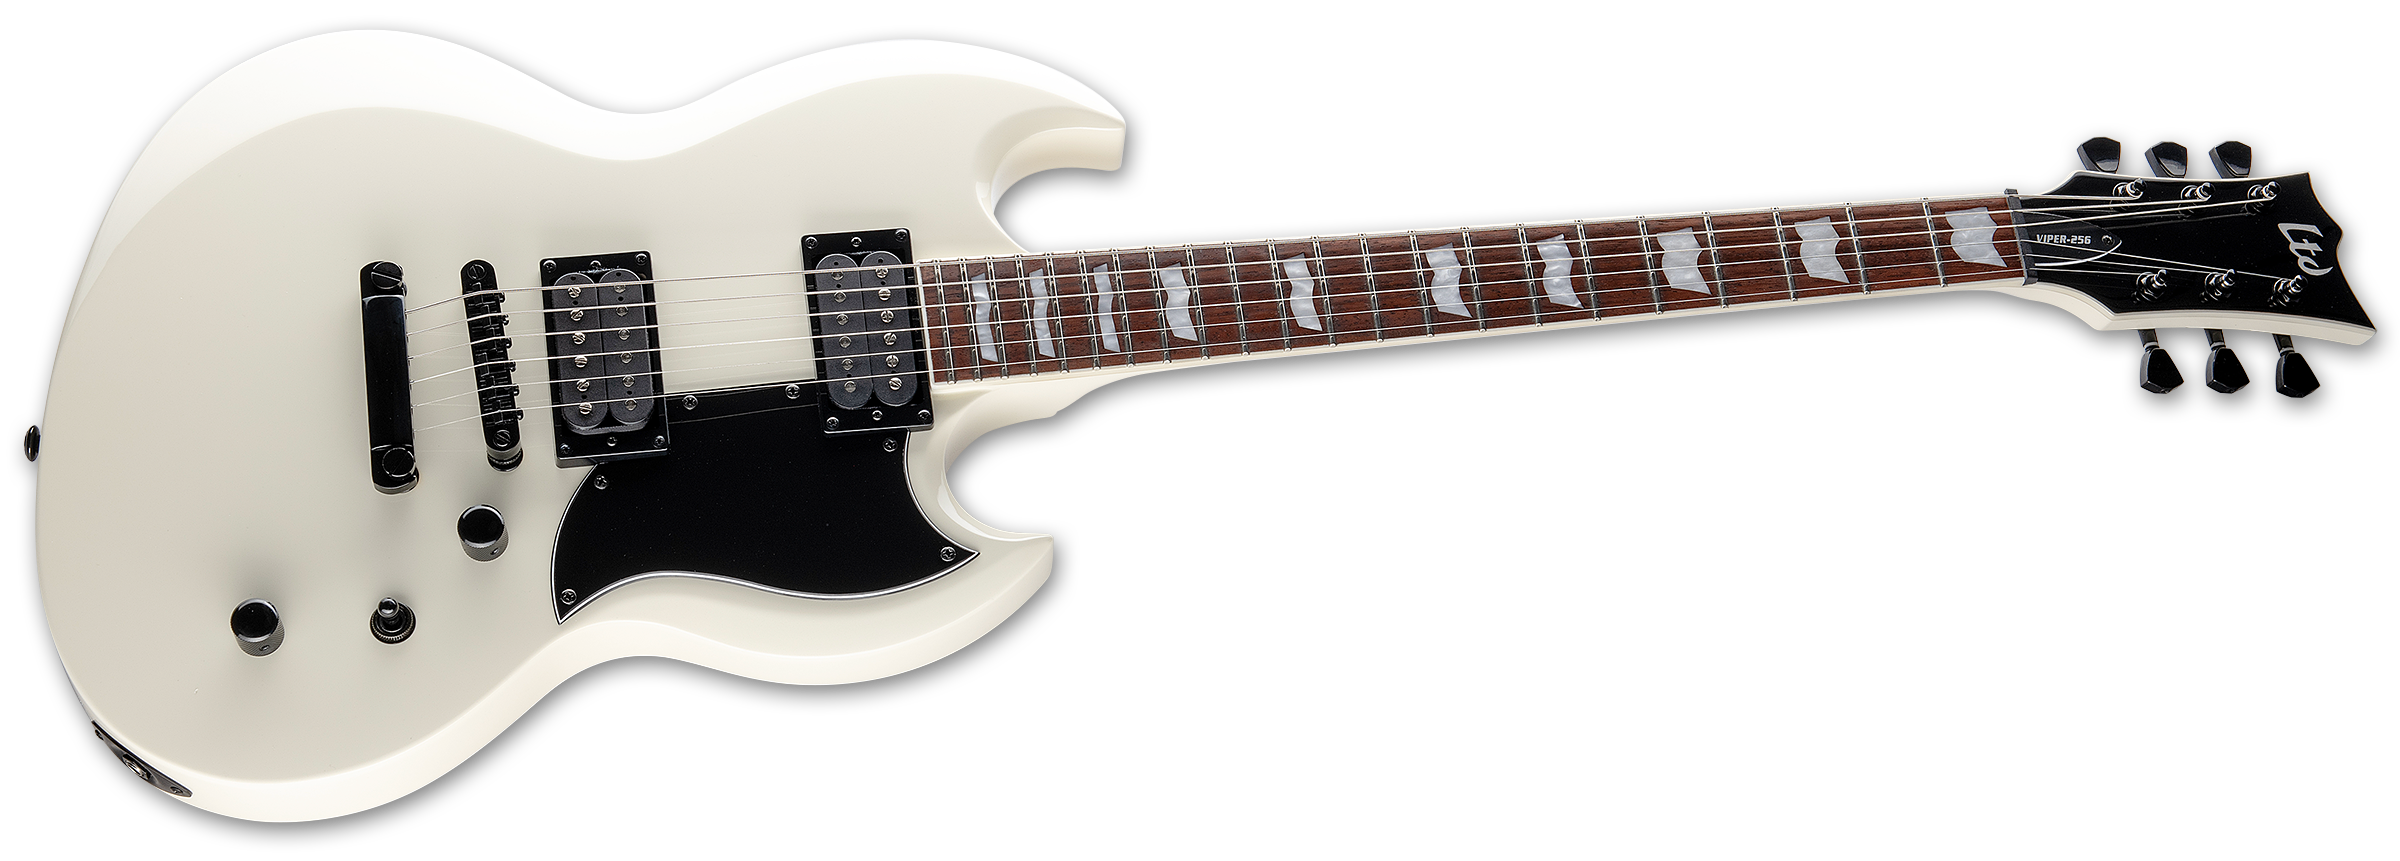 Ltd Viper-256 Hh Jat - Olympic White - E-Gitarre aus Metall - Variation 2